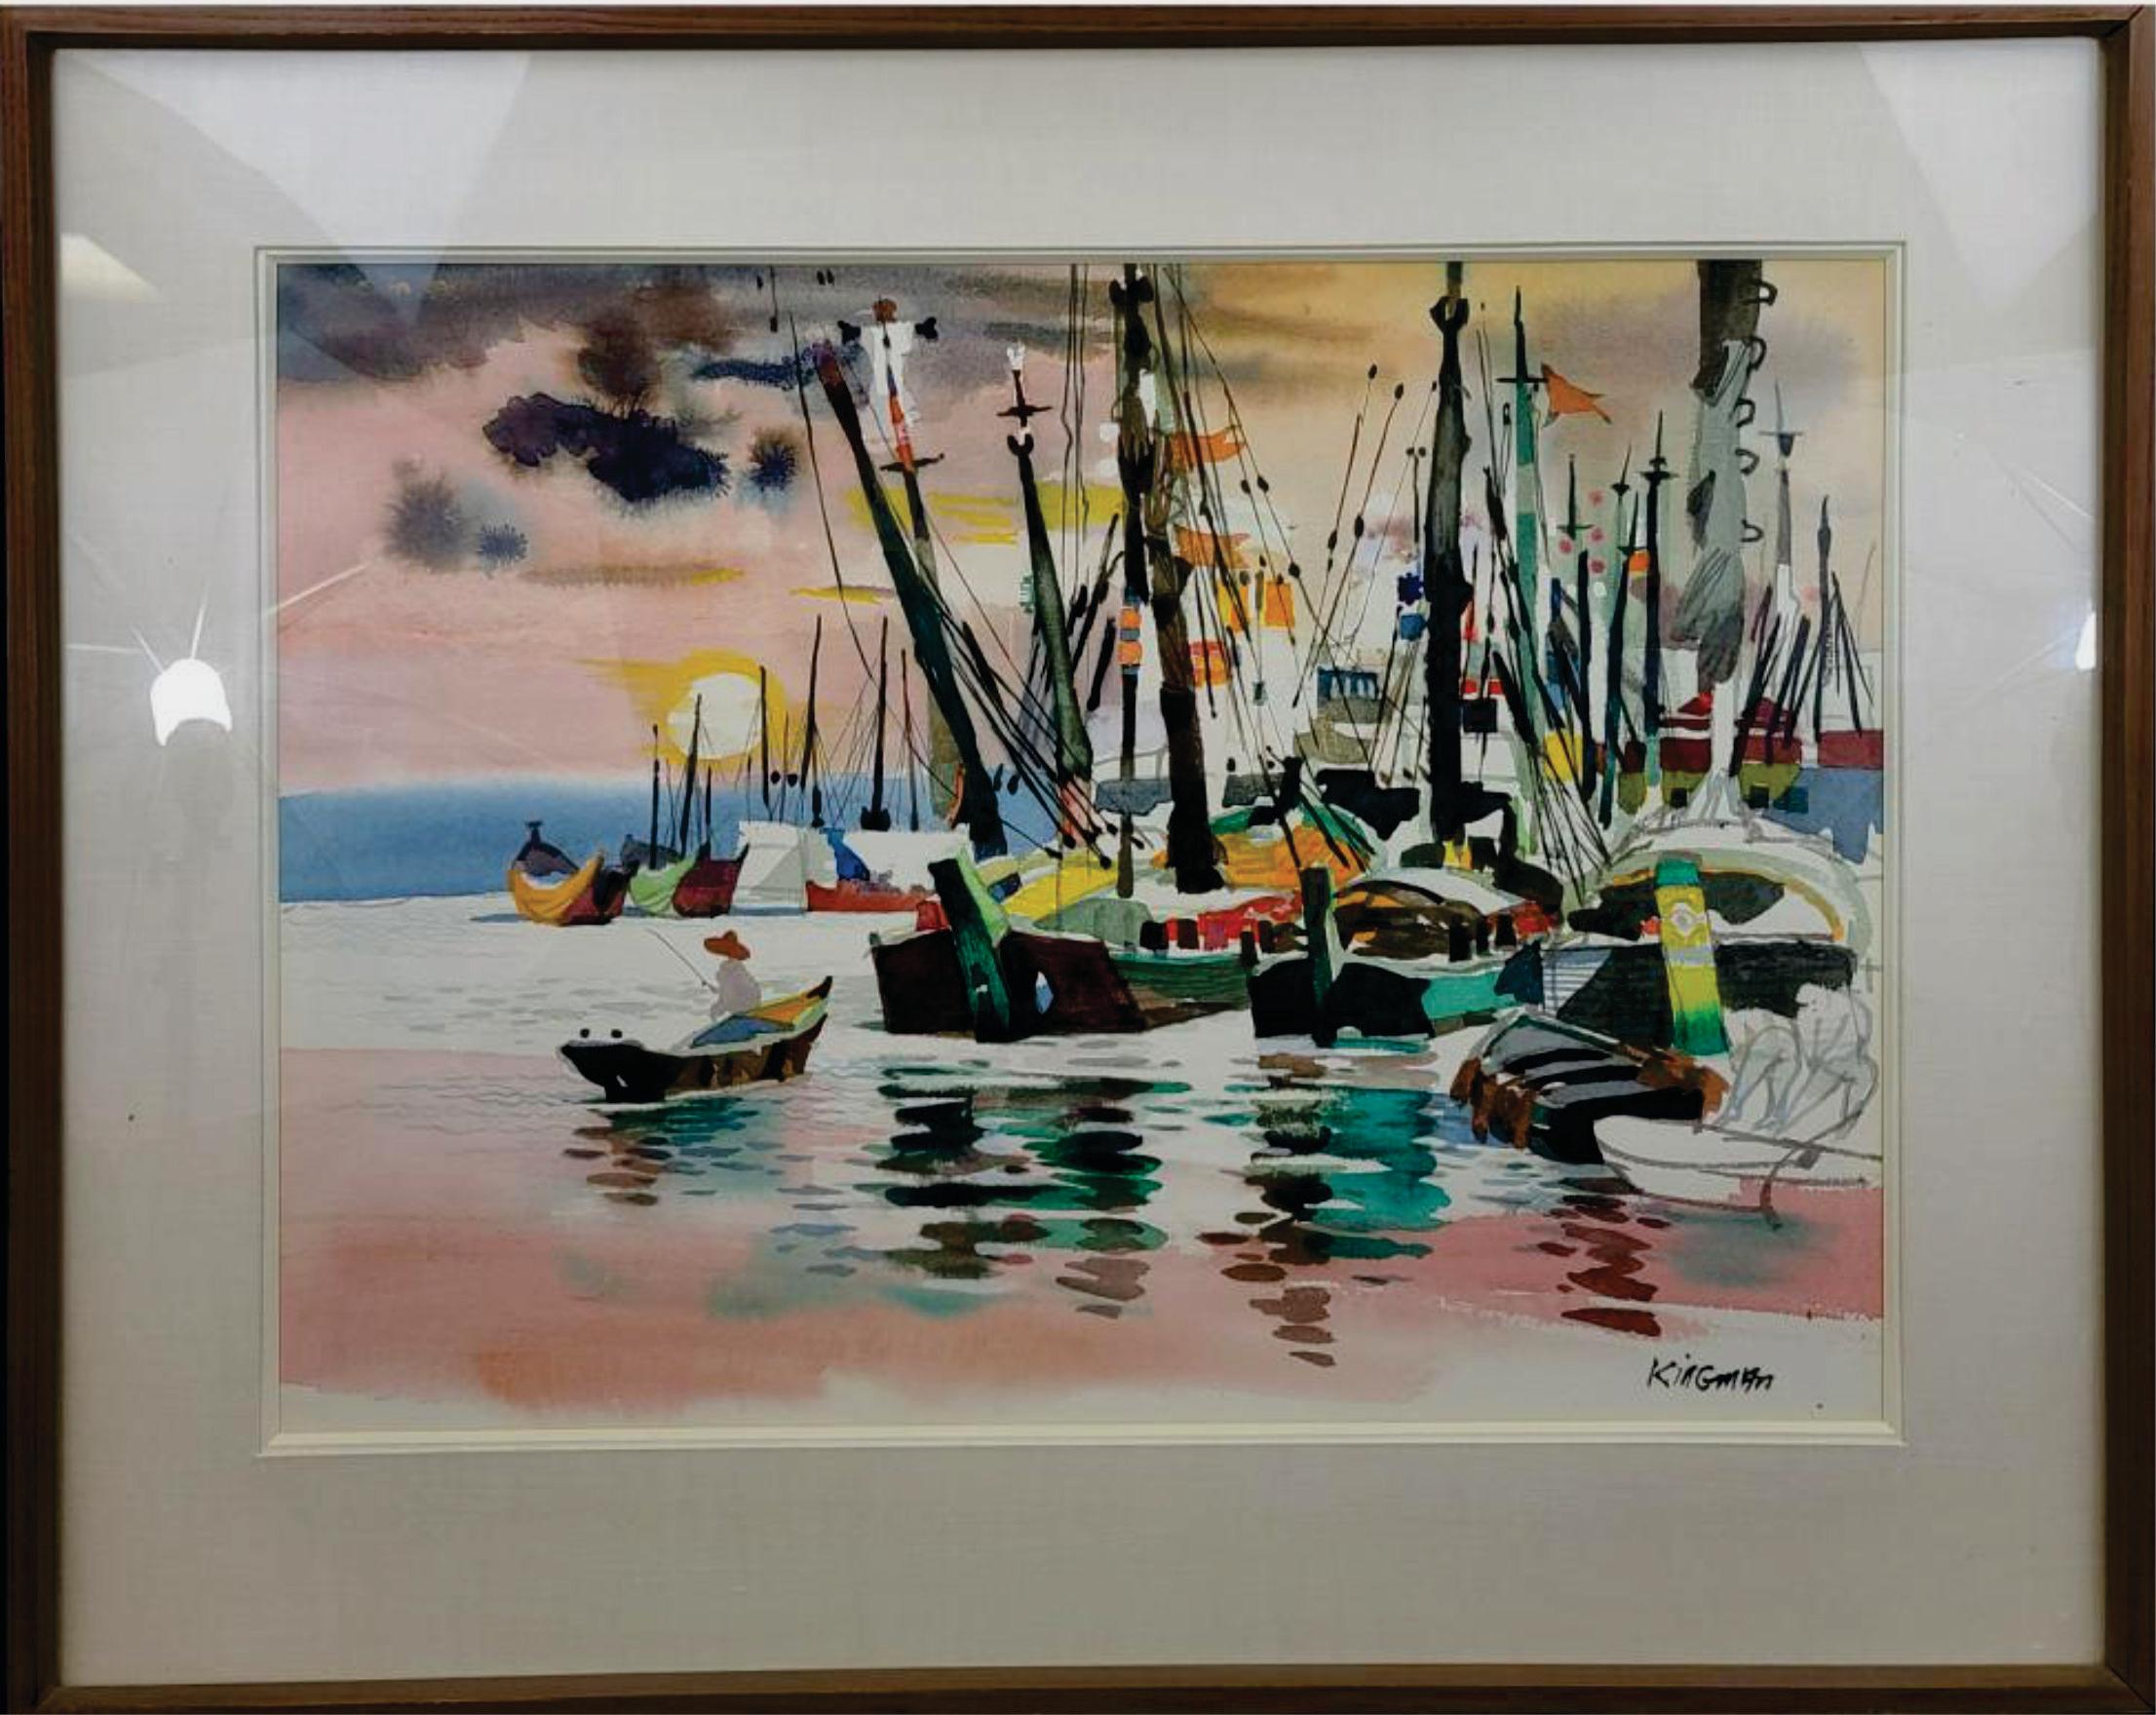 Dong Kingman Large Original Watercolor Painting "Sunset in Harbor" Signed